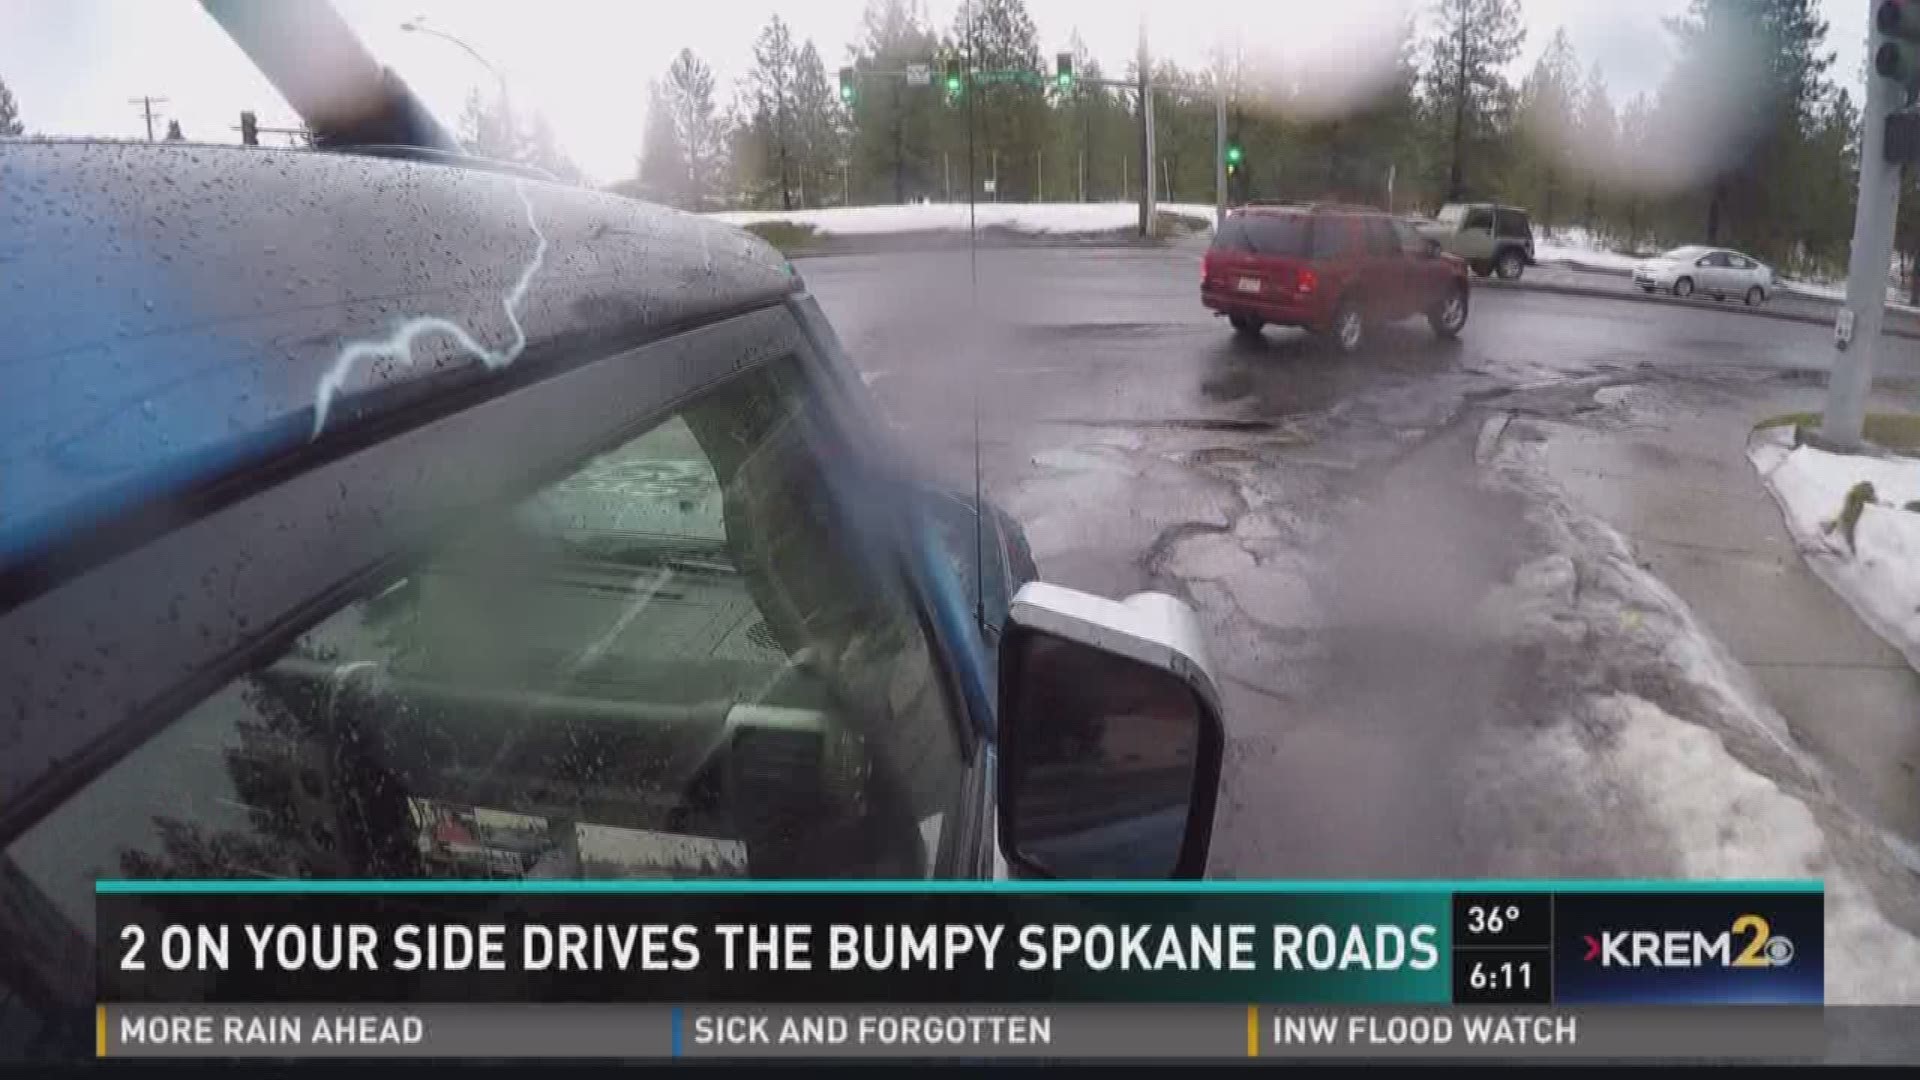 2 On Your Side drives the bumpy Spokane roads